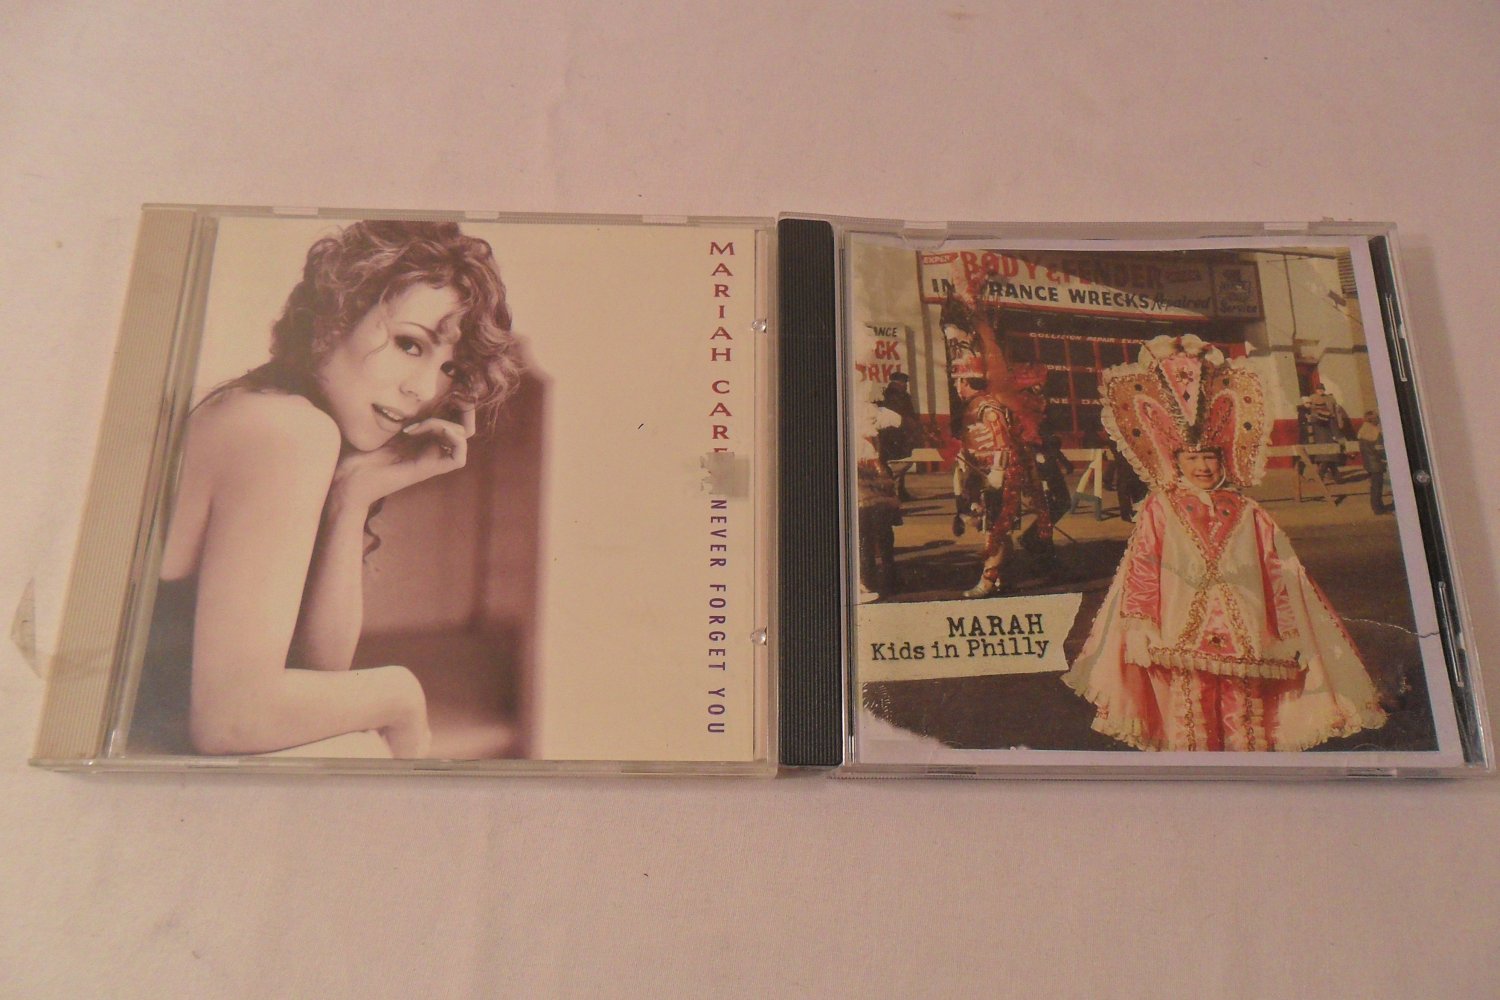 Lot of 2 Mariah Carey and Marah CDs